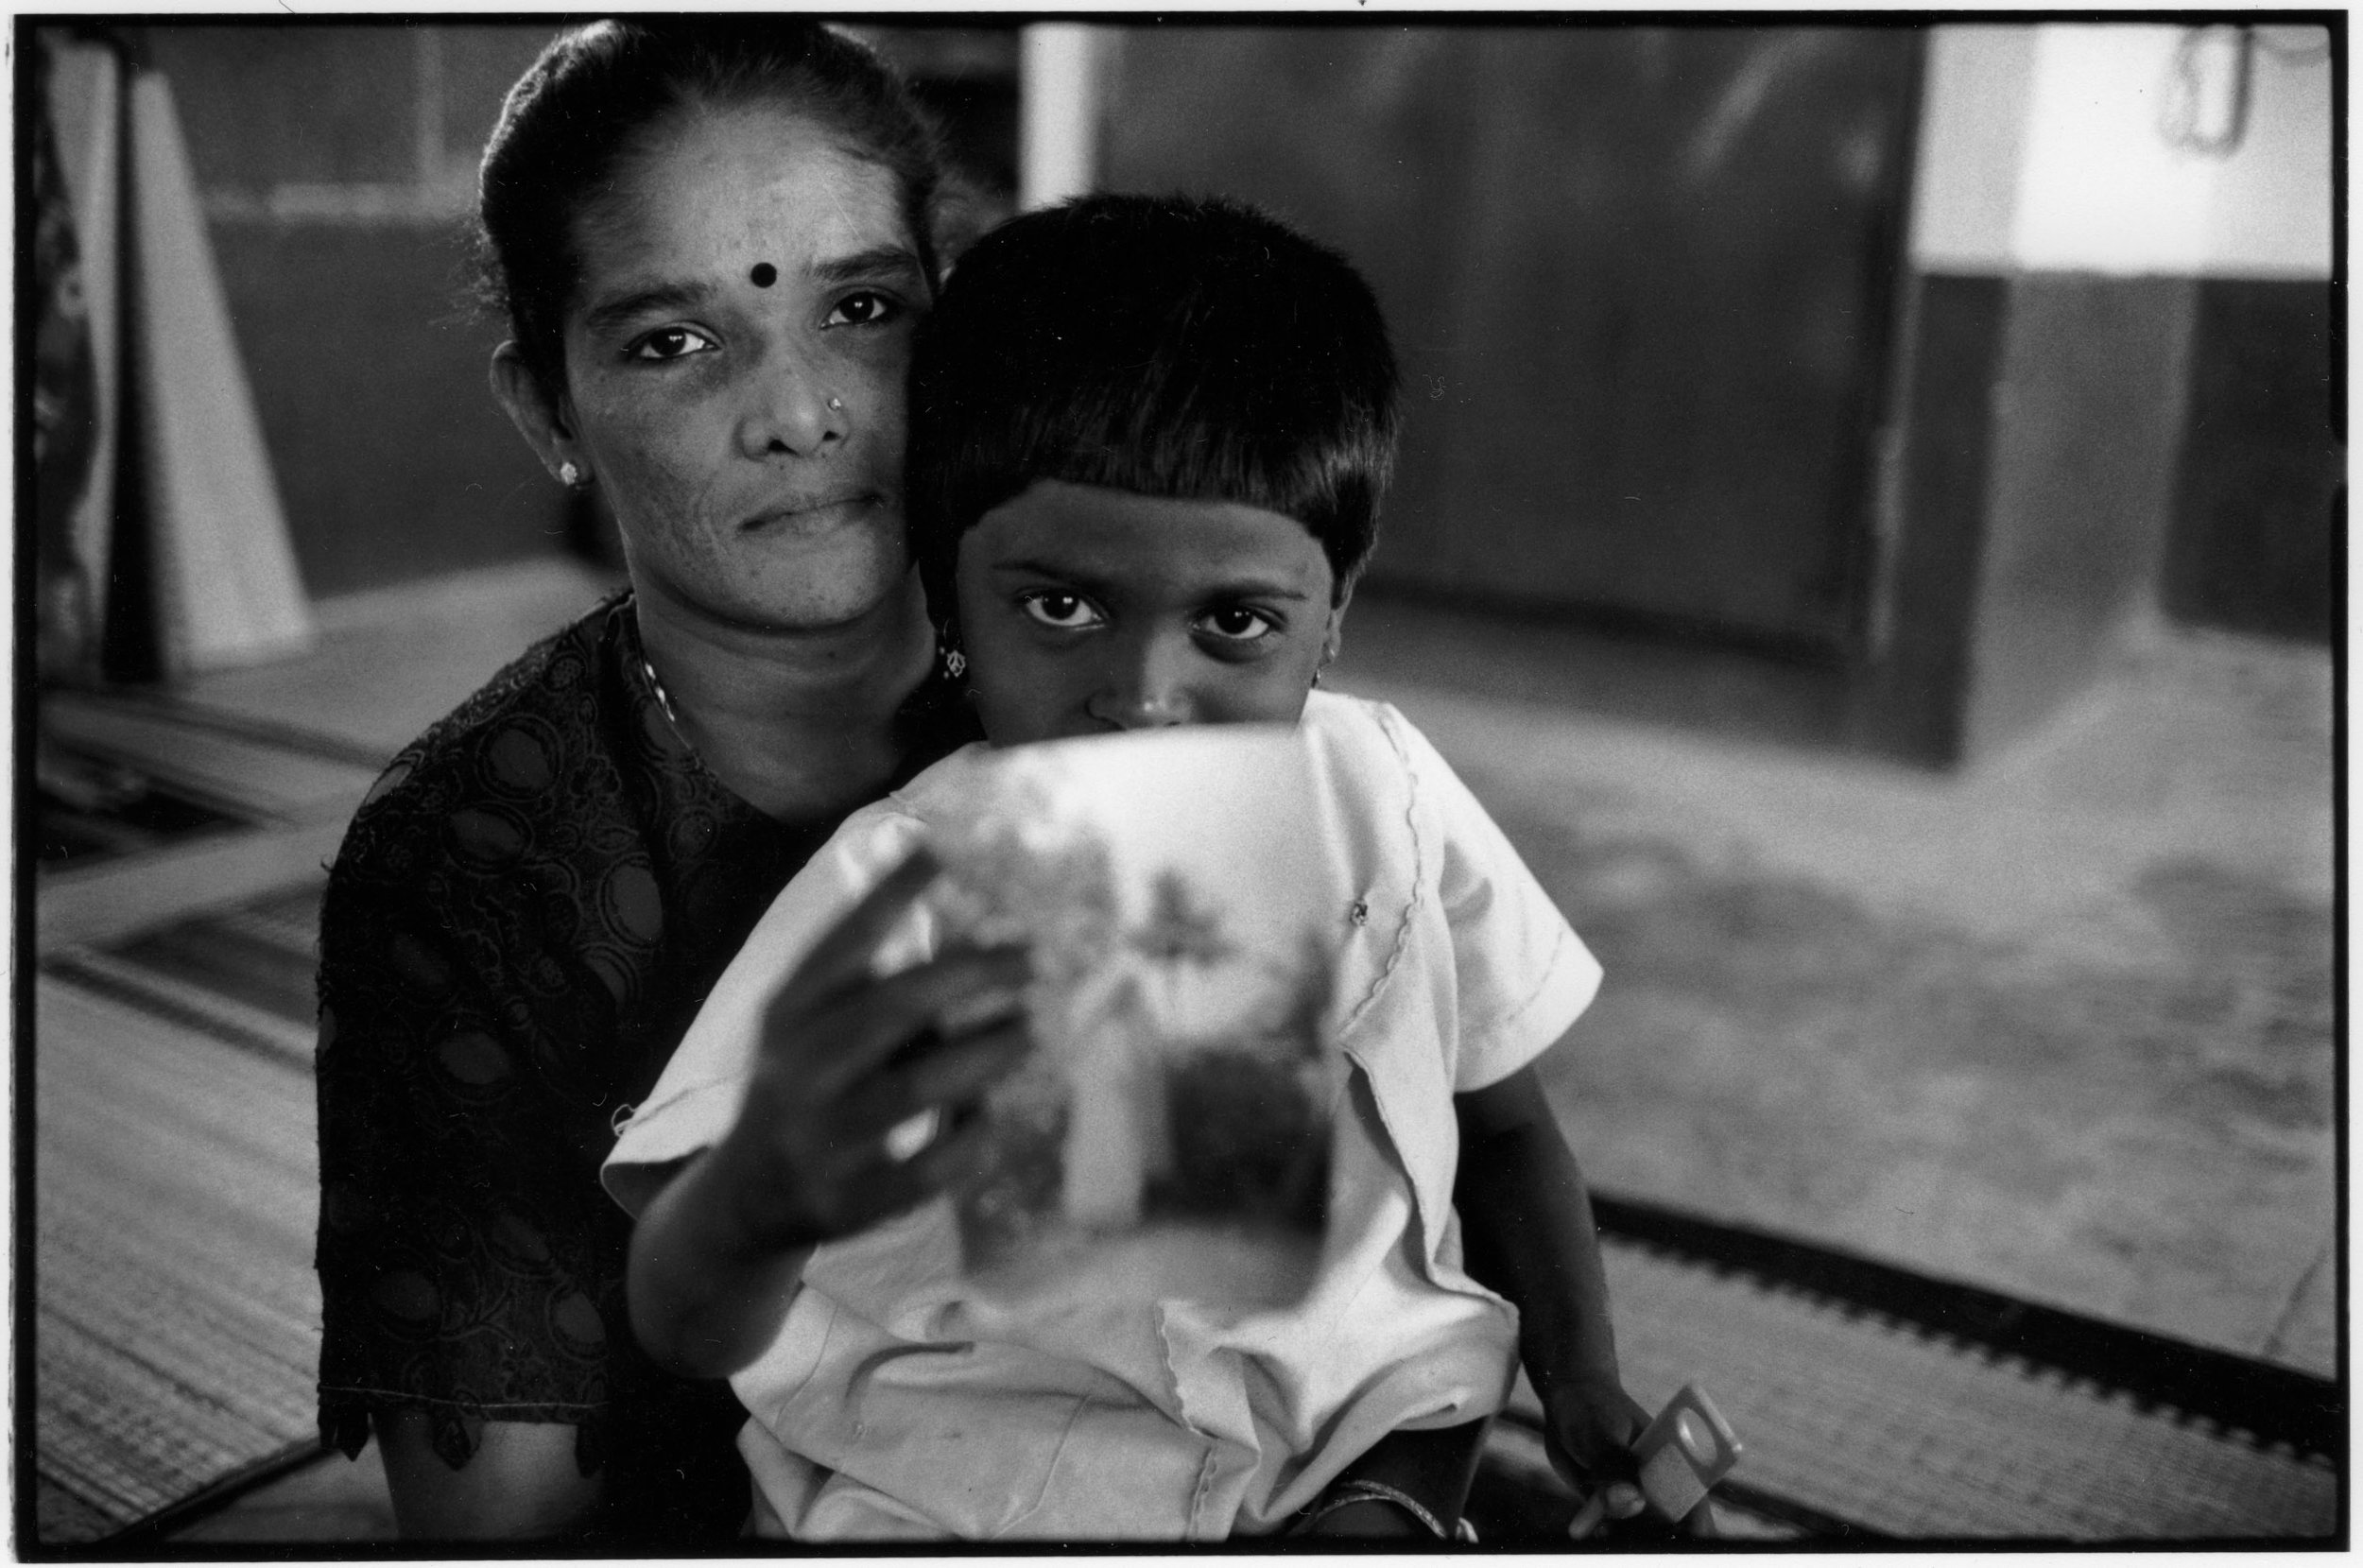 07_freelance photographer_Srinivas Kuruganti_New Delhi_HIV AIDS India.jpg